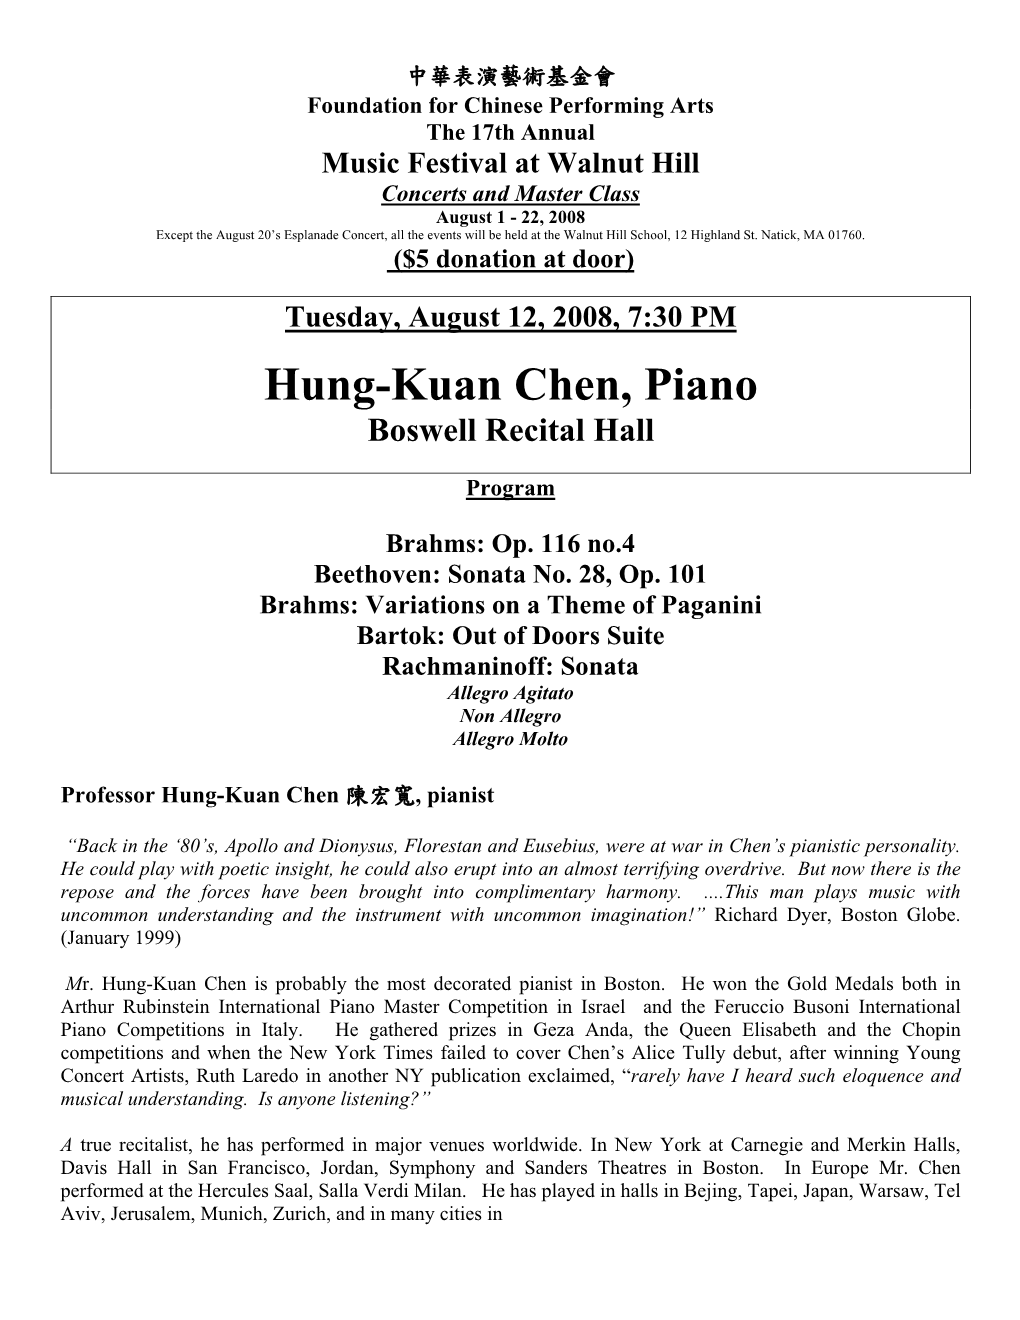 Hung-Kuan Chen, Piano Boswell Recital Hall